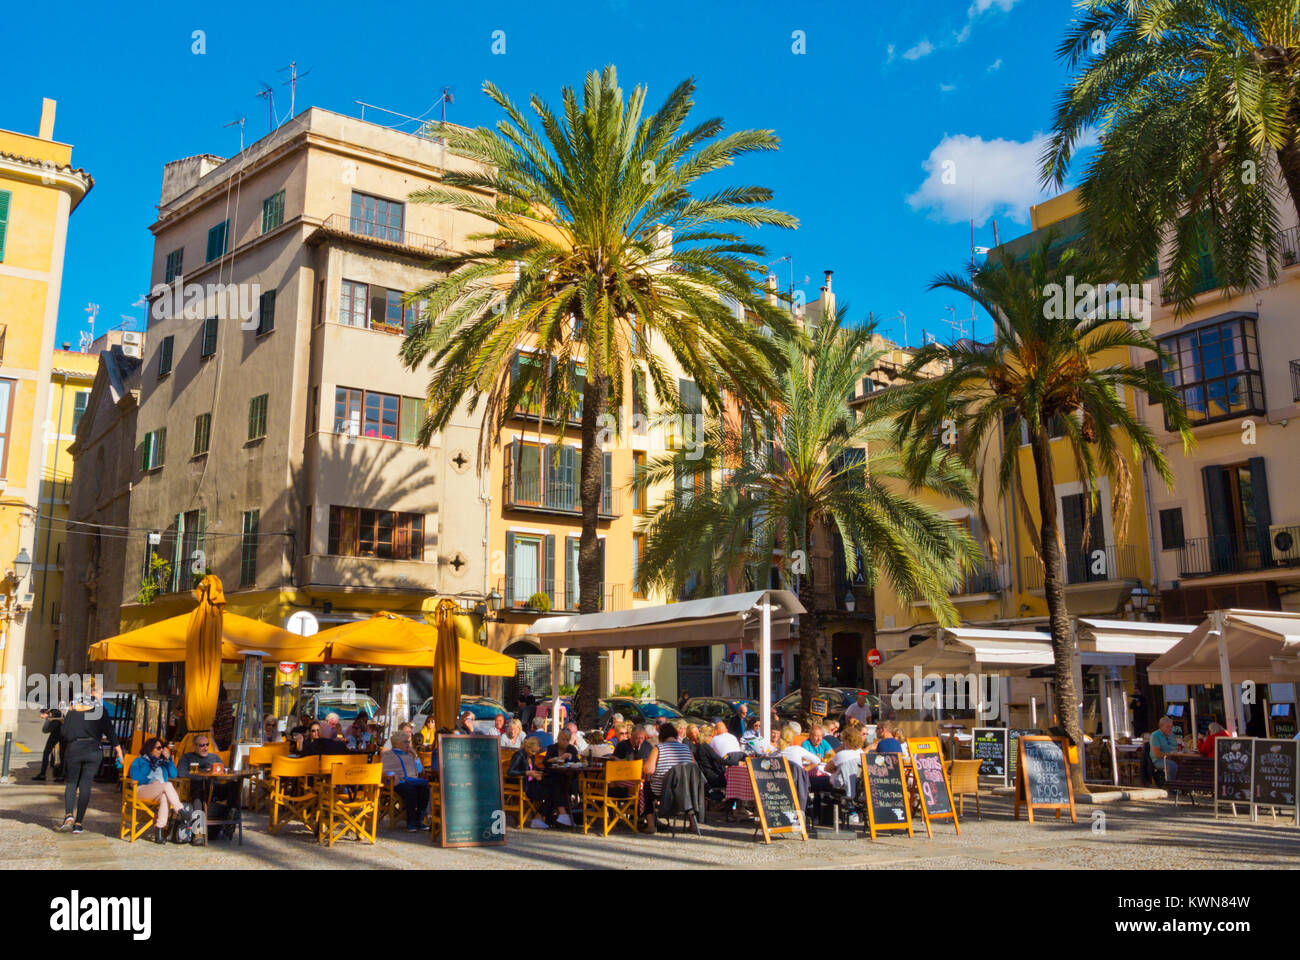 Cafe and restaurant terraces, Placa de la Llotja, Palma, Mallorca, Balearic islands, Spain Stock Photo